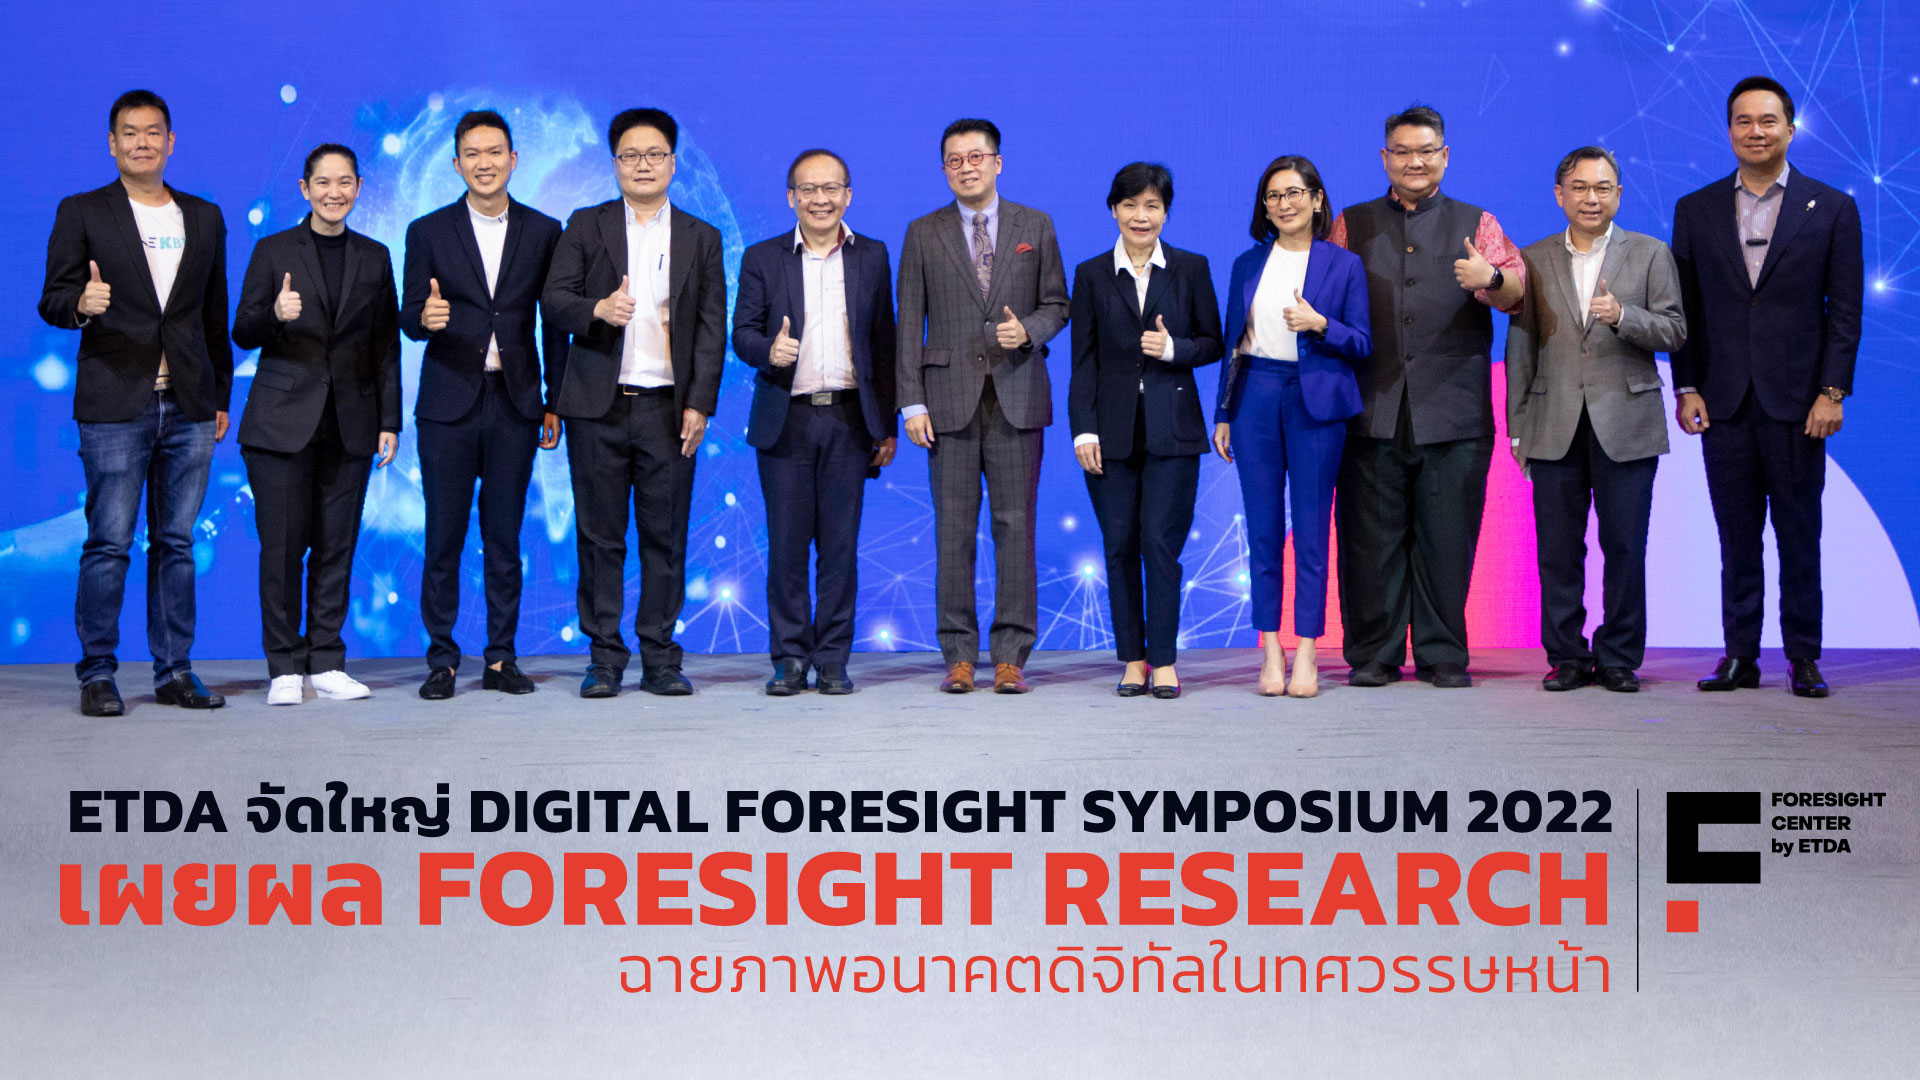 ETDA จัดใหญ่ Digital Foresight Symposium 2022  เผยผล Foresight Research ฉายภาพอนาคตดิจิทัลในทศวรรษหน้า